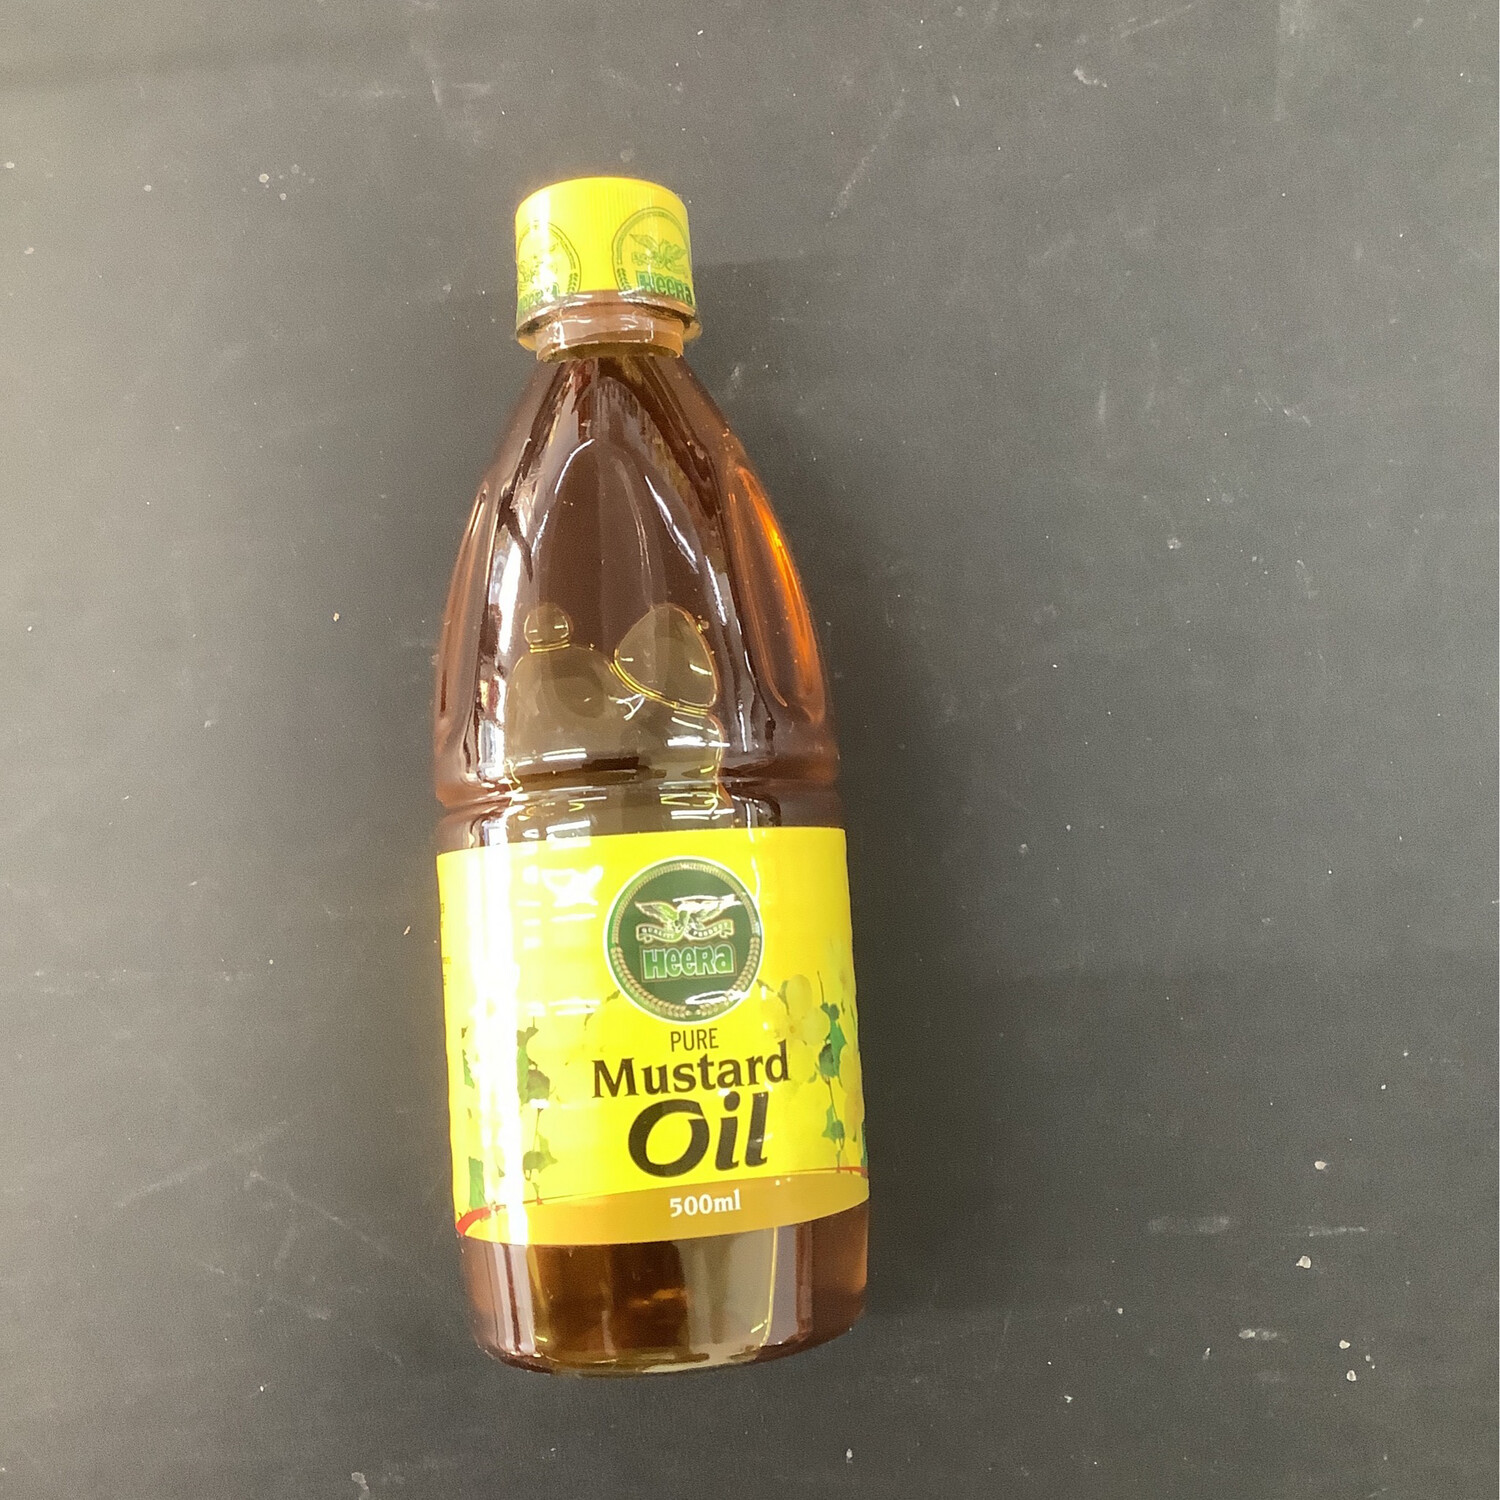 Heera Pure Mustard Oil 500g